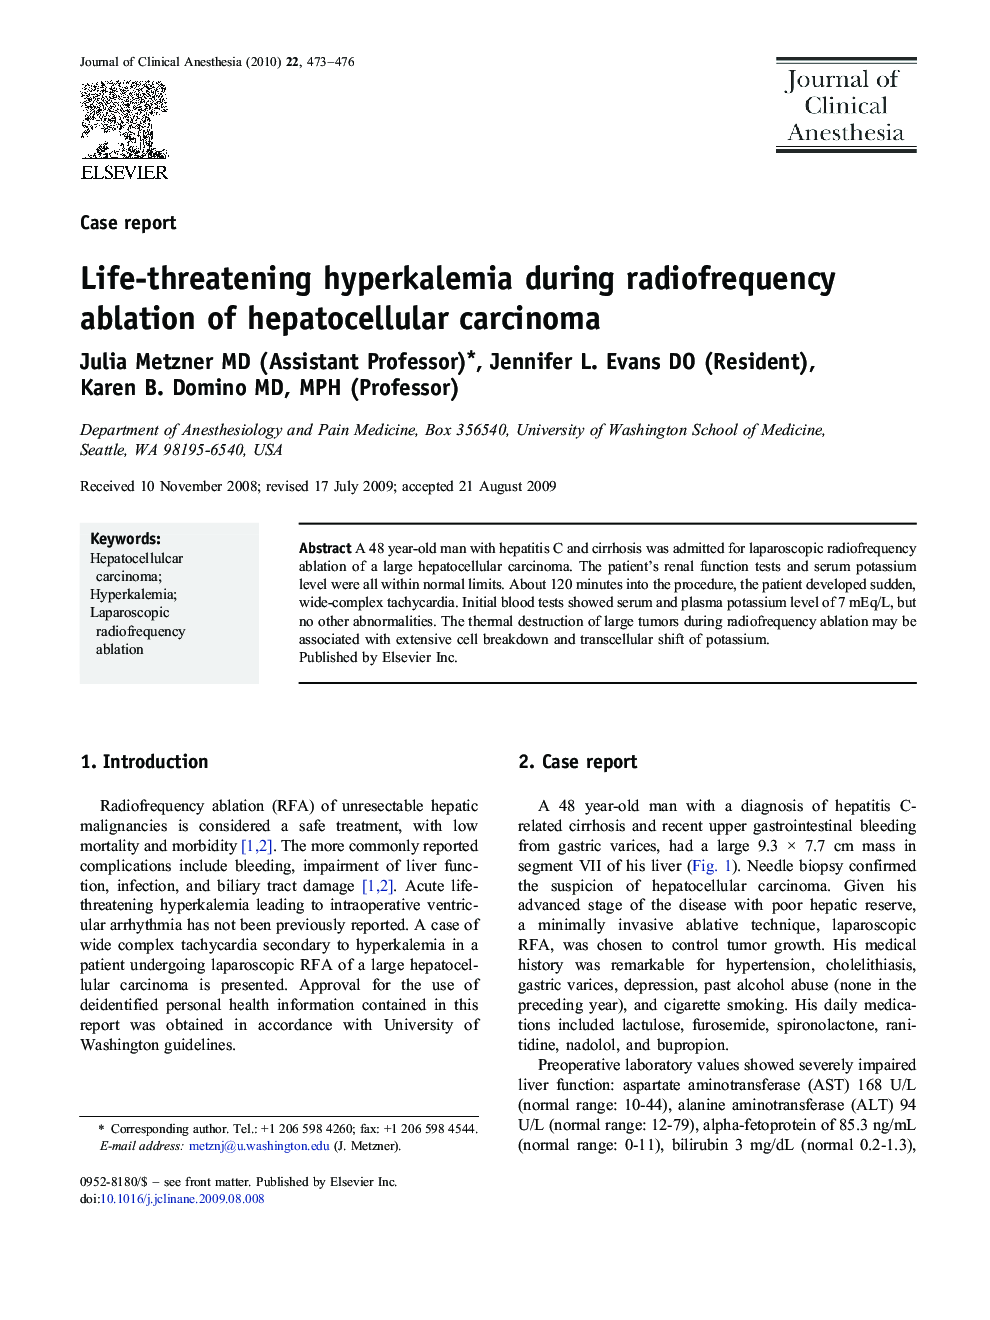 Life-threatening hyperkalemia during radiofrequency ablation of hepatocellular carcinoma